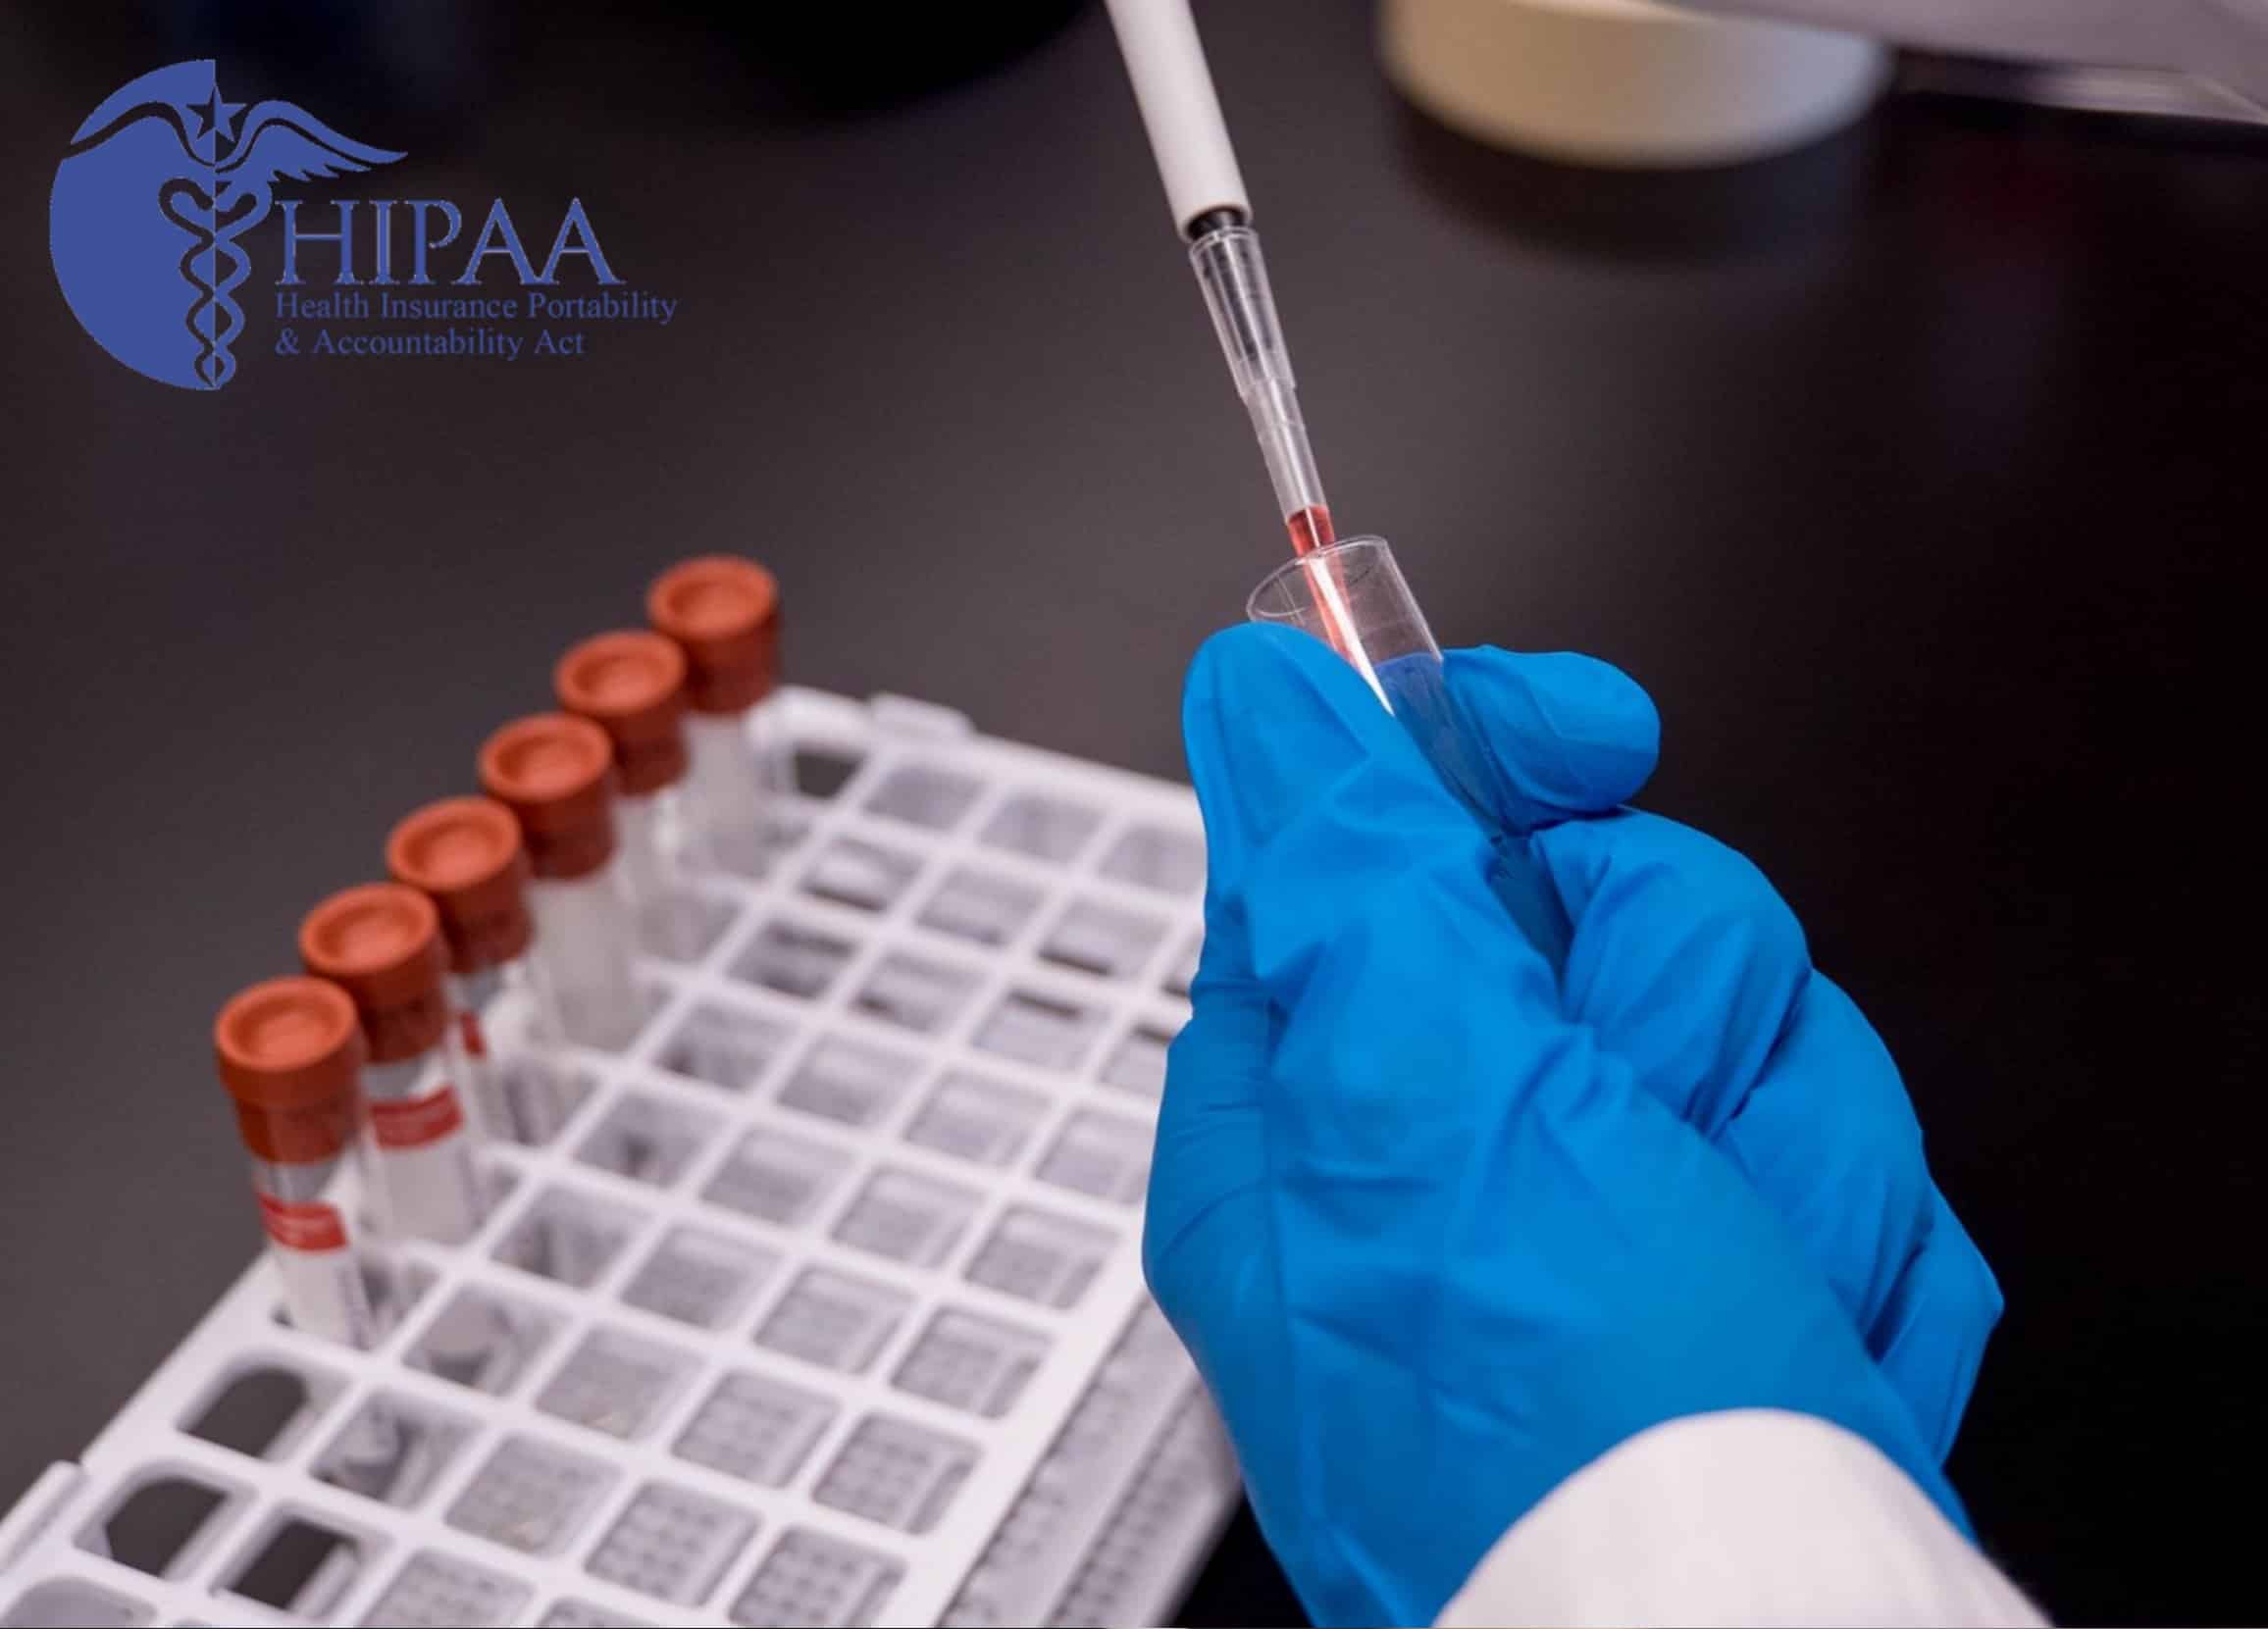 HIPAA Laboratory Rules